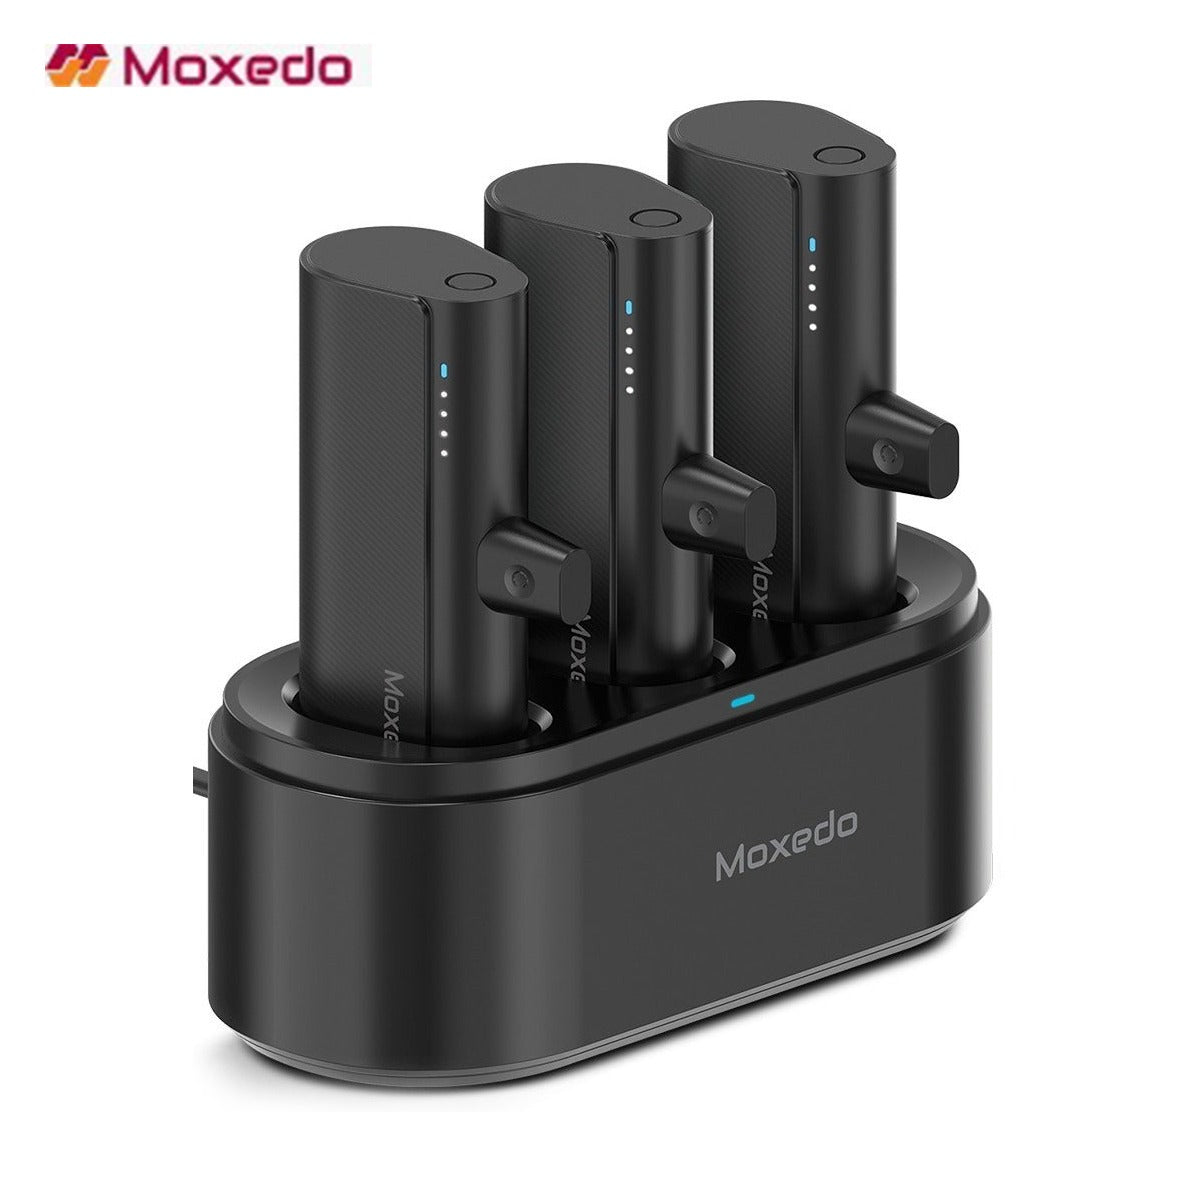 Moxedo 3 in 1 3x 5000 mAh USB‐C Connector Power Bank